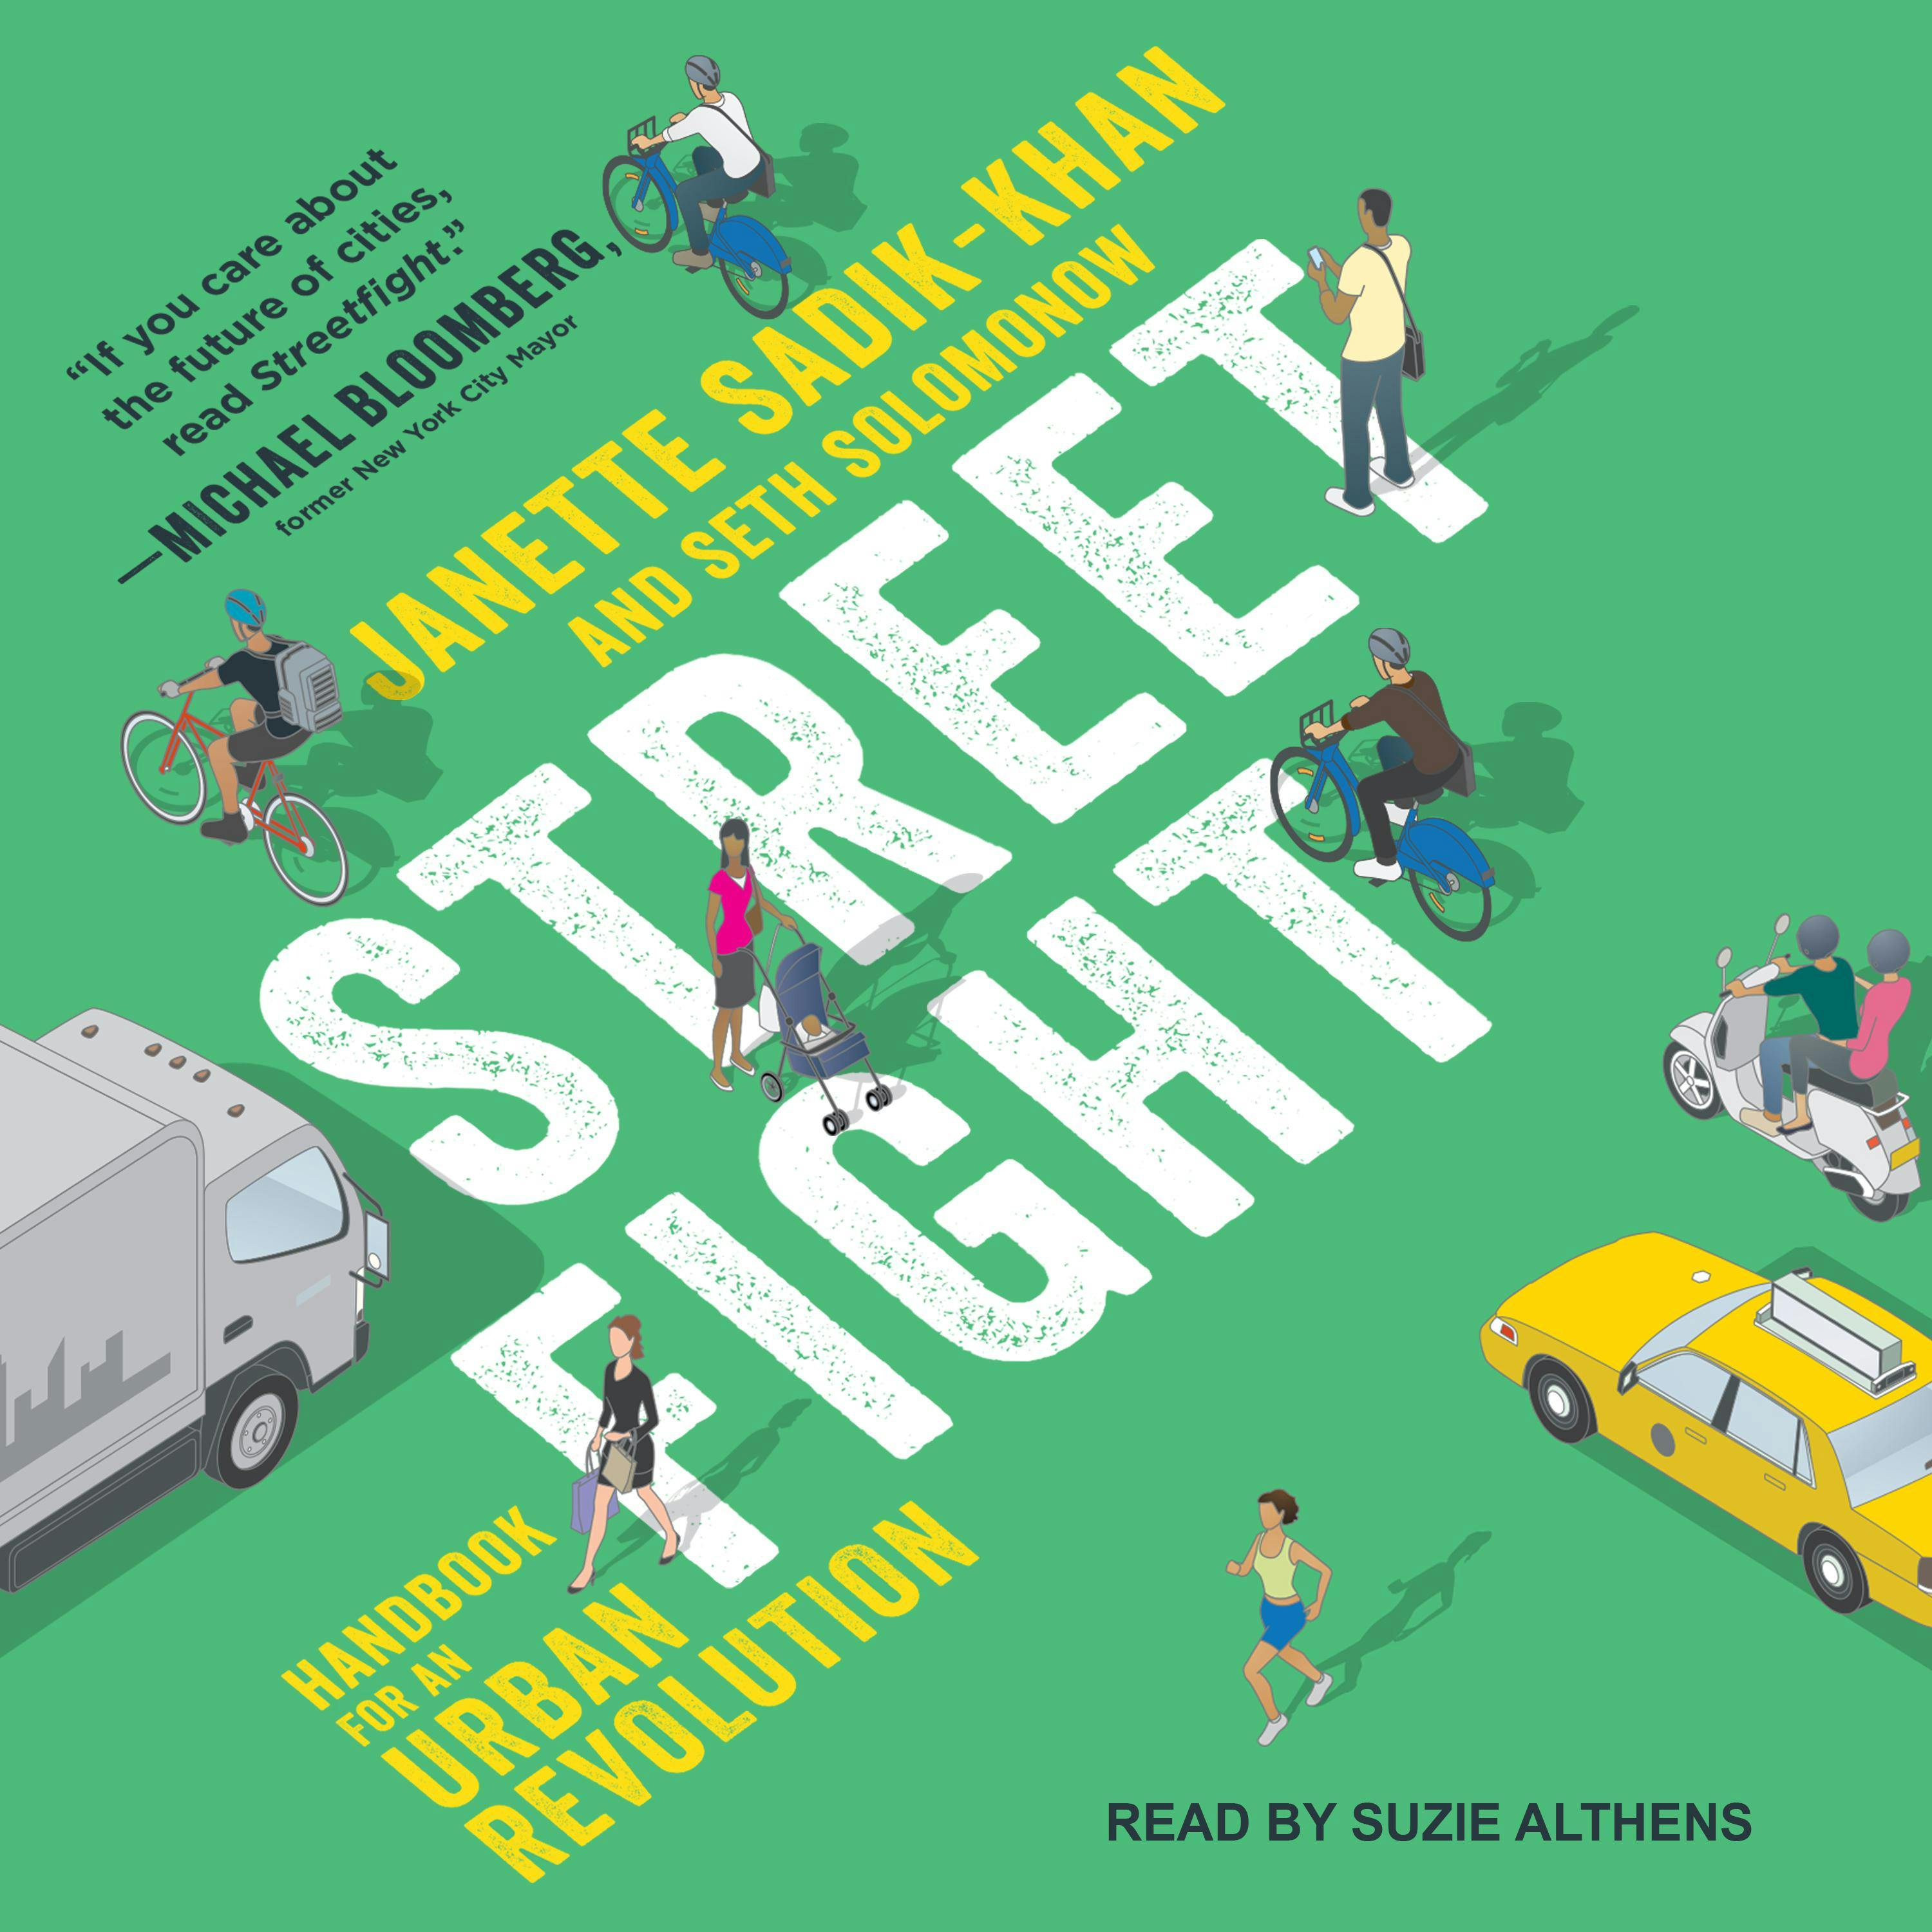 Streetfight: Handbook for an Urban Revolution - undefined